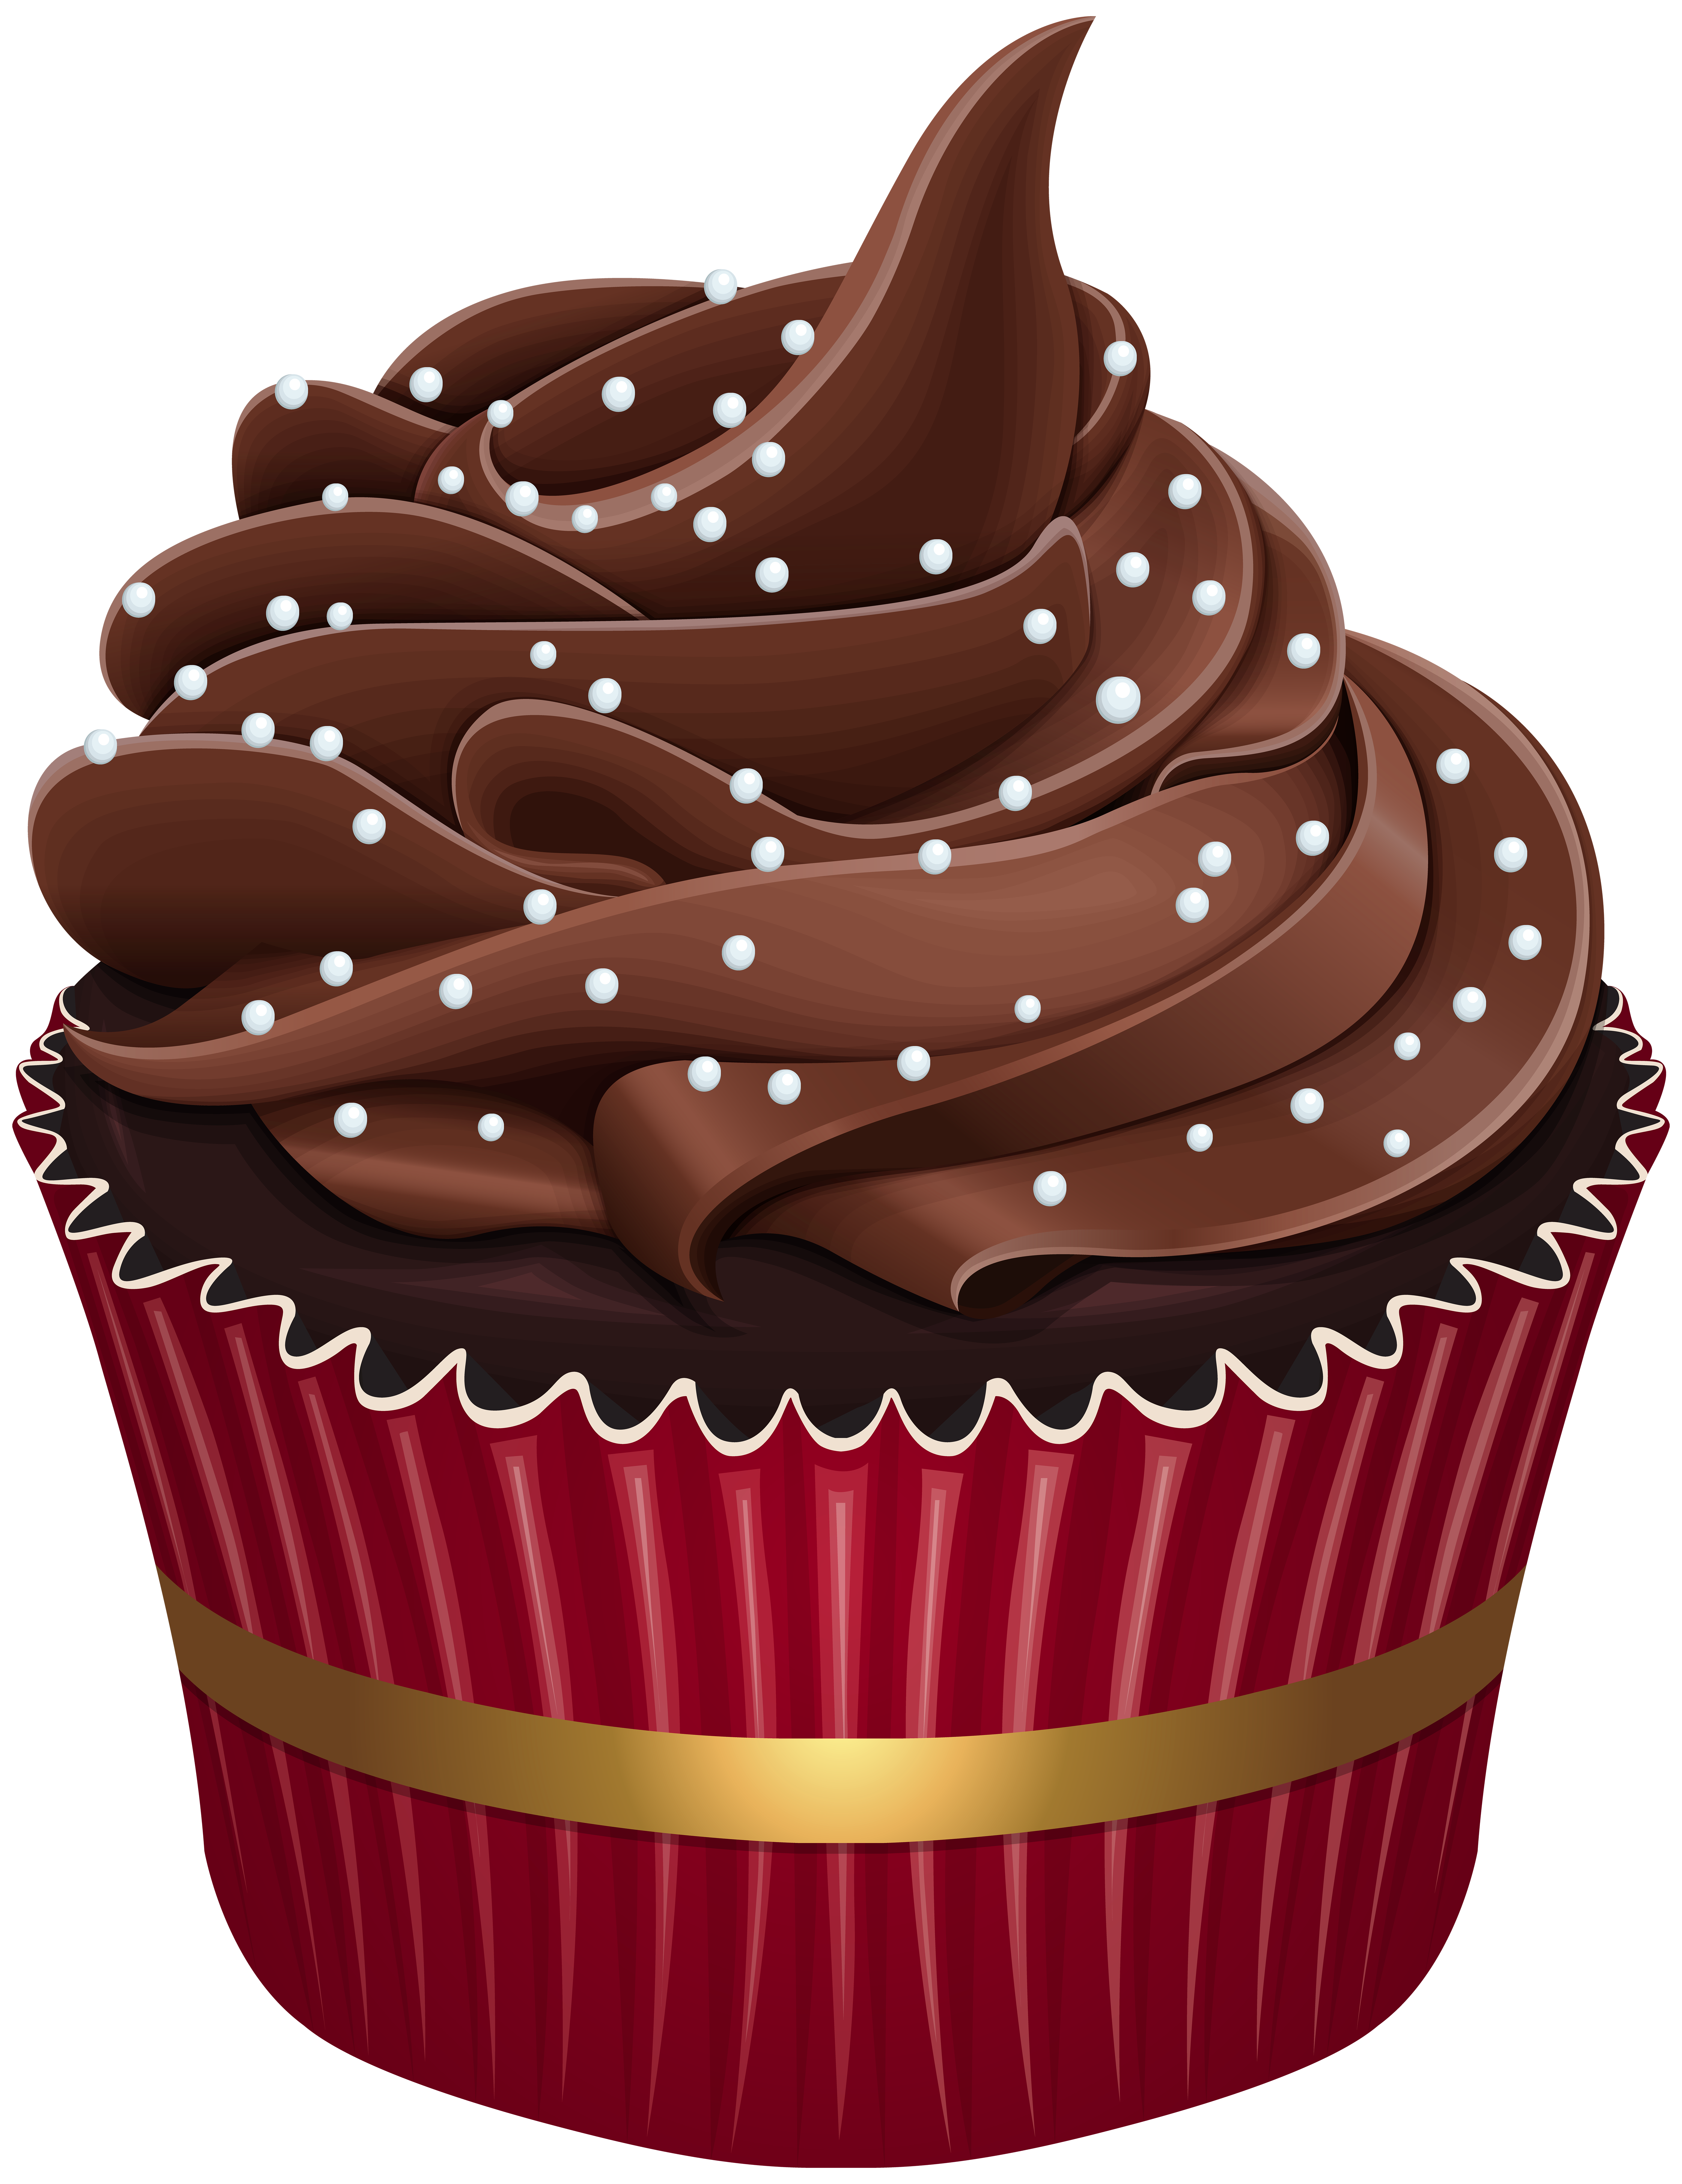 Cupcake Muffin Torta Clip art - cupcakes clipart png download - 6163*